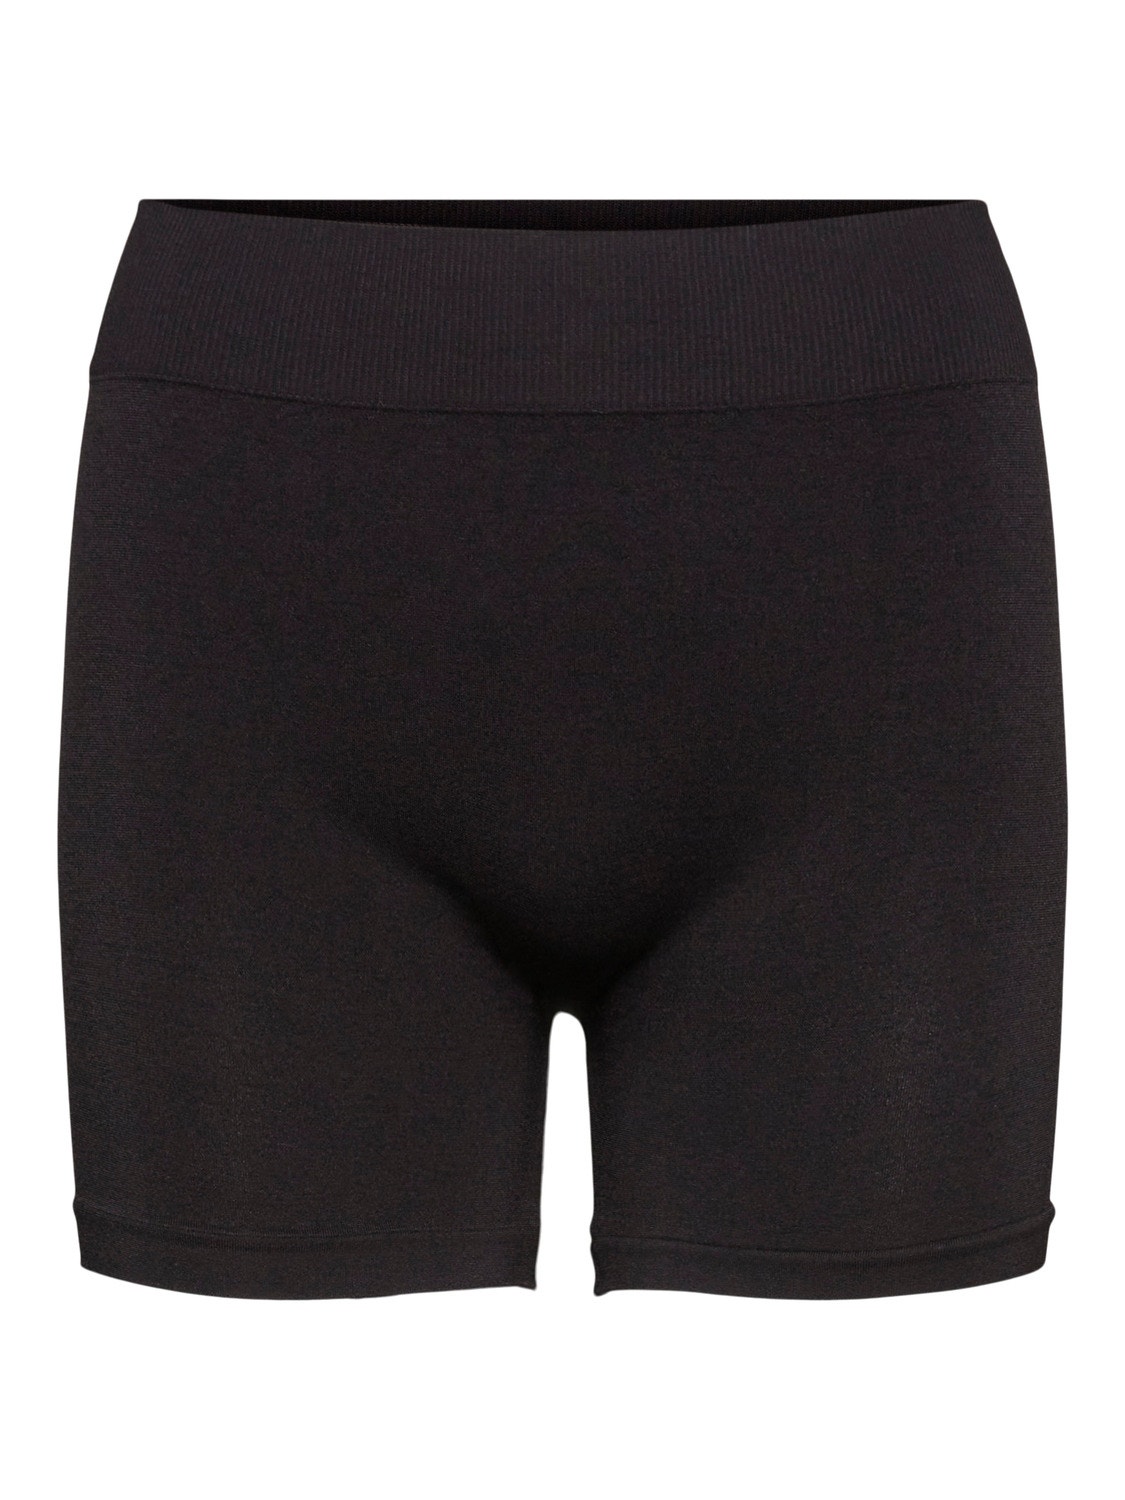 Vero Moda VMJACKIE Underwear -Black - 10285272